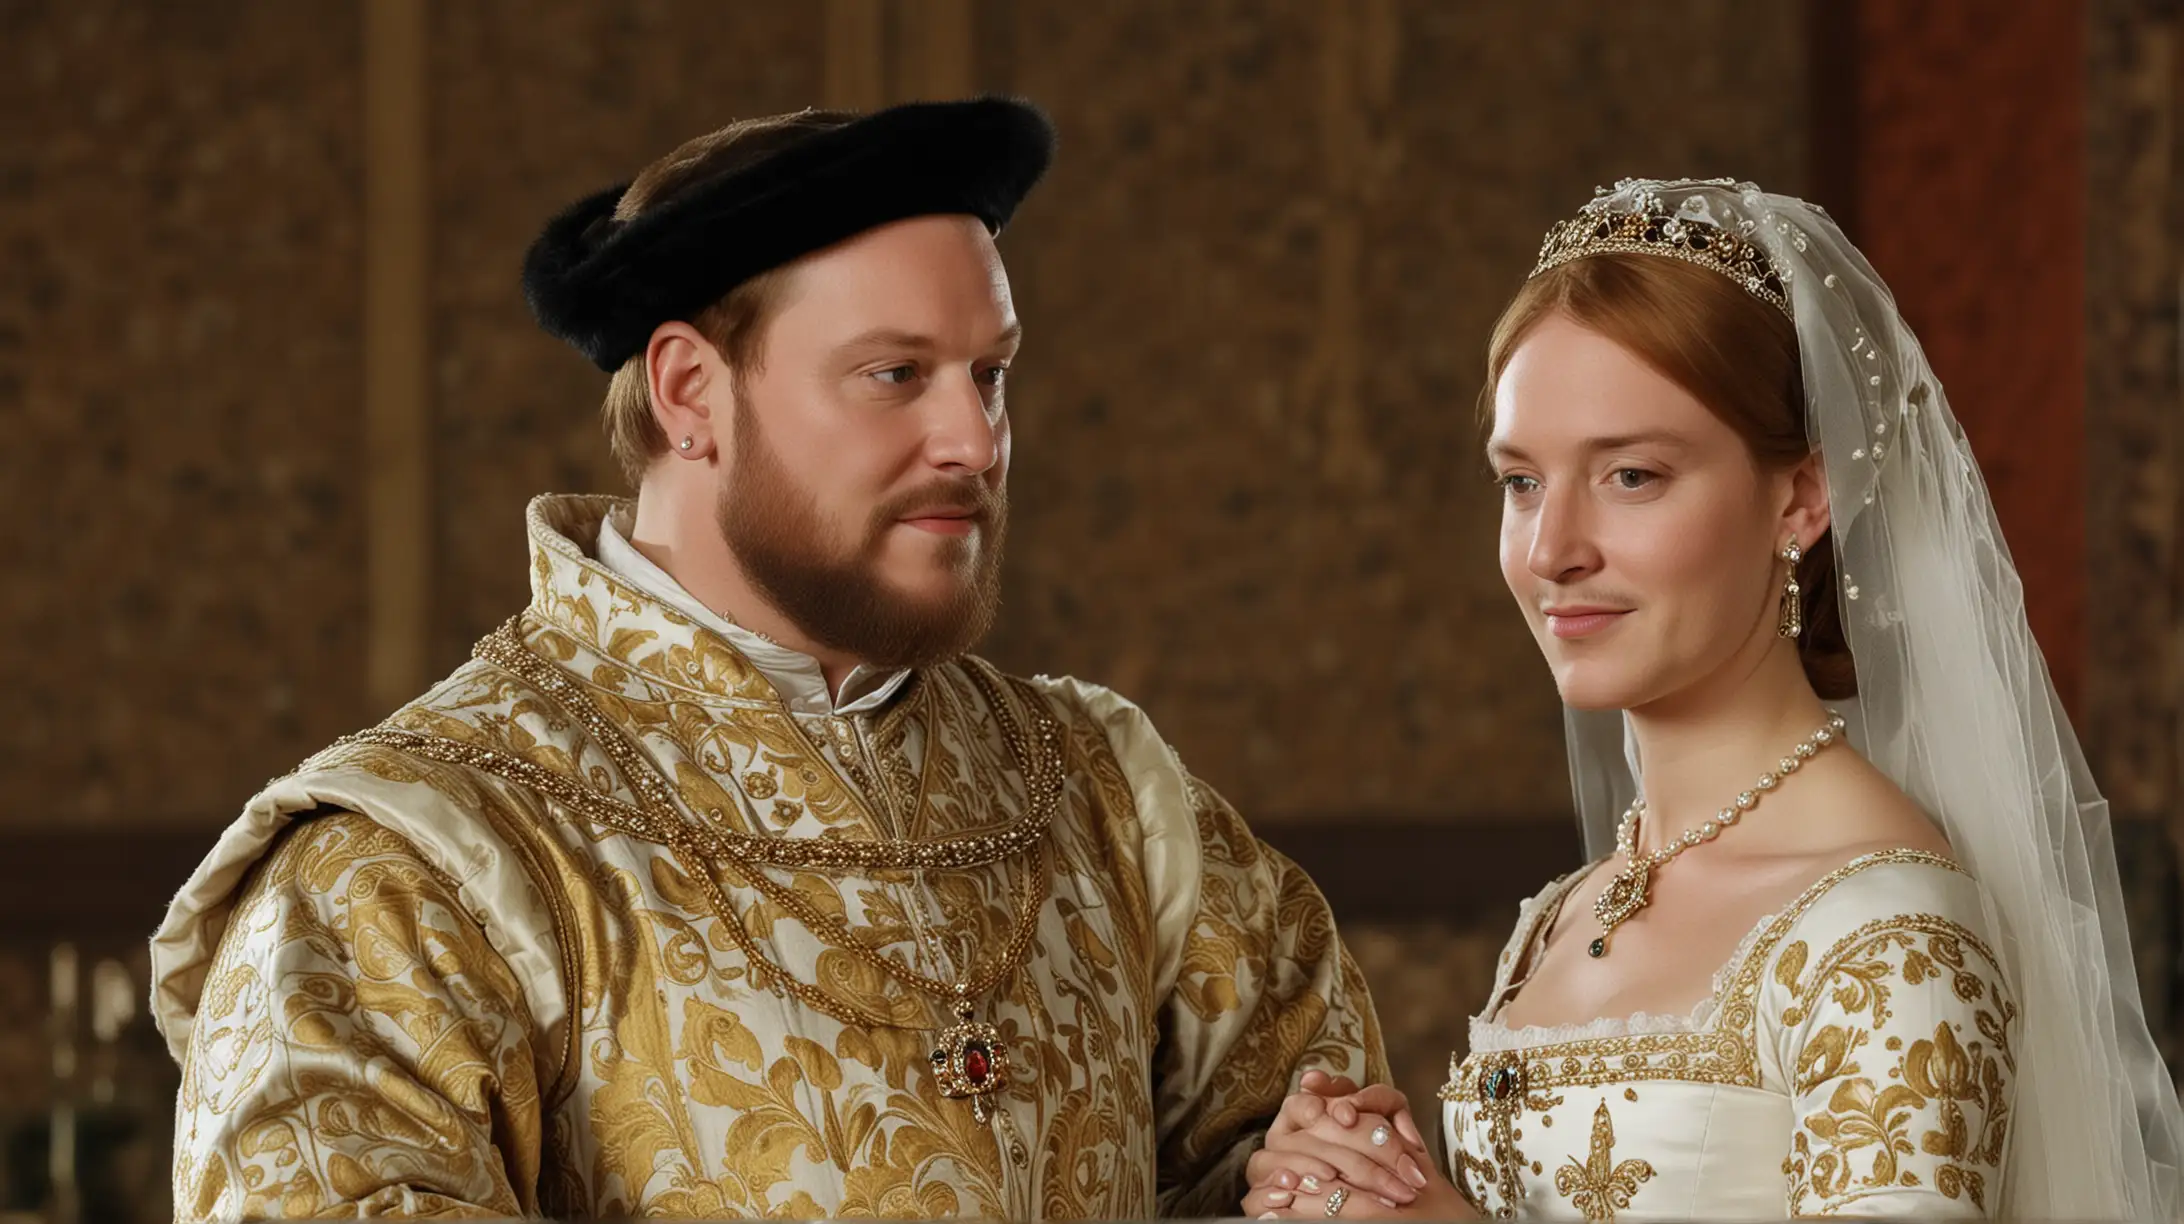 Royal Wedding King Henry VIII Marries Catherine Howard in Tudor Dynasty